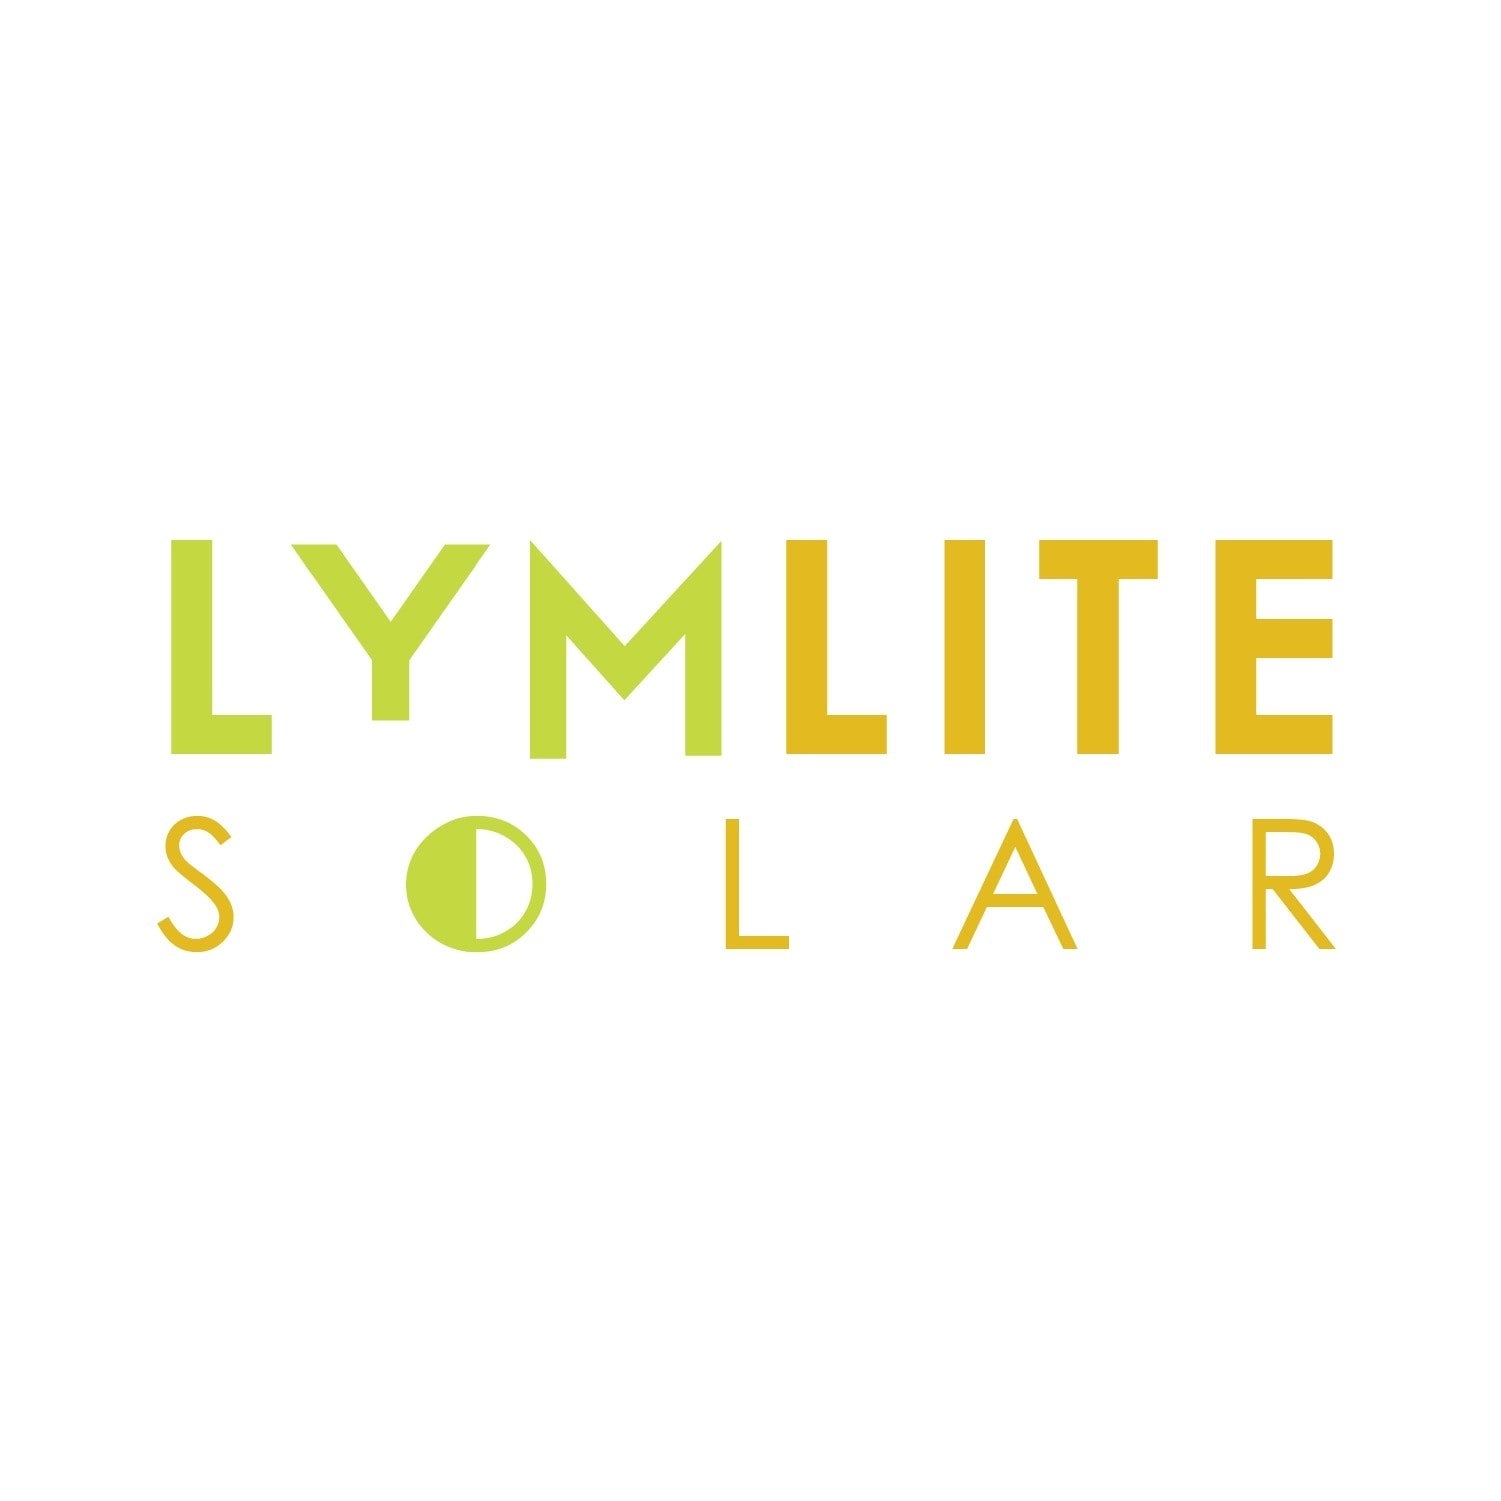 LymLite Solar